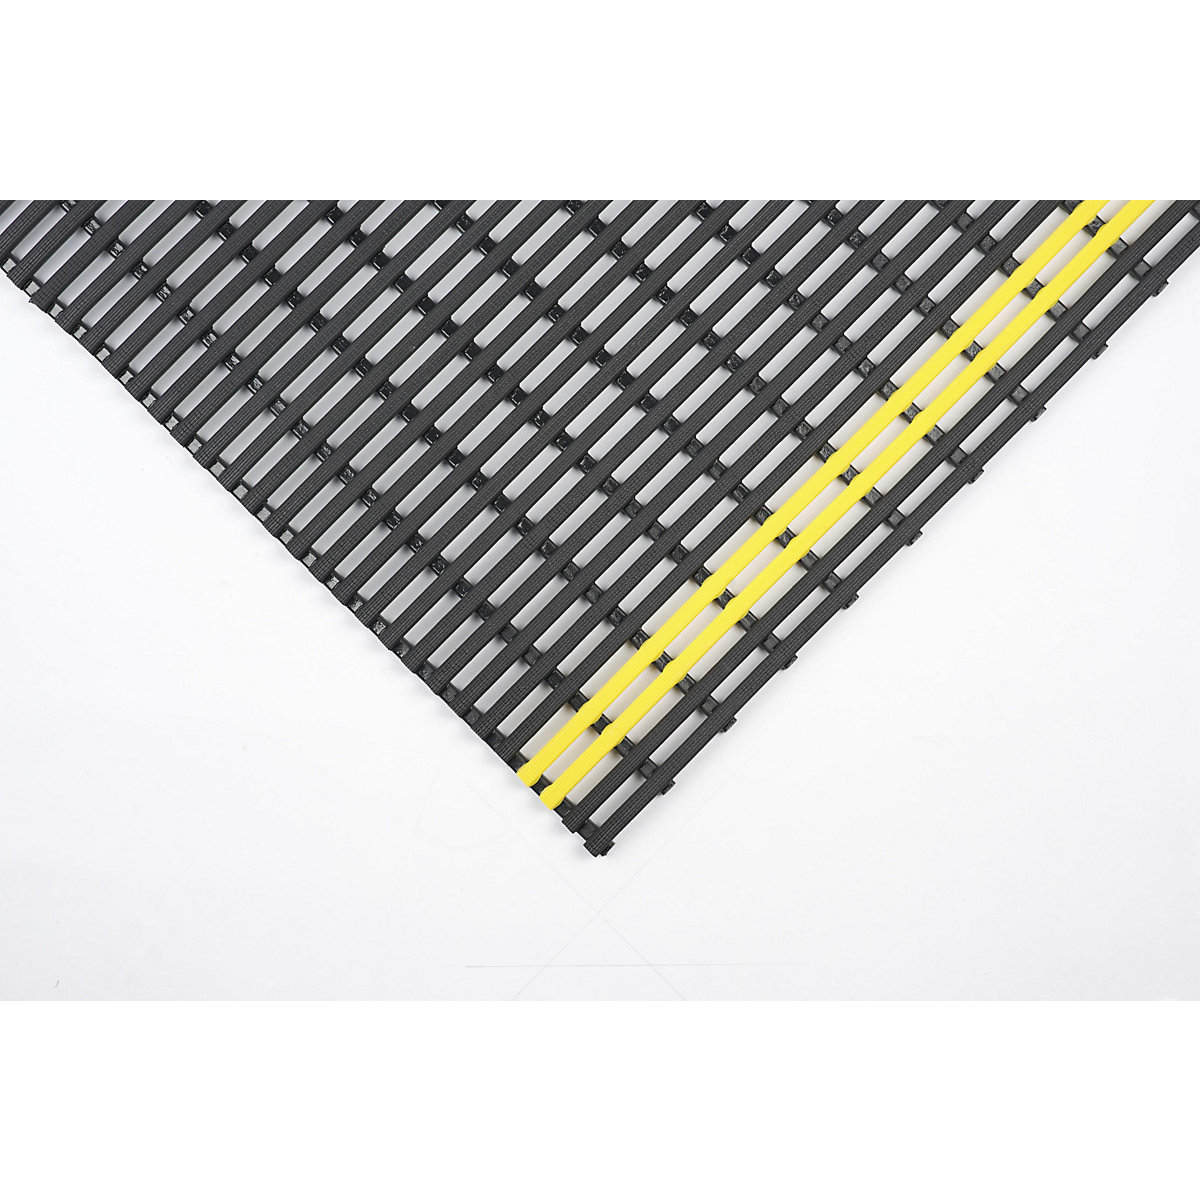 Protišmyková podložka, recyklované PVC, na bežný m, šírka 800 mm, čierna/žltá